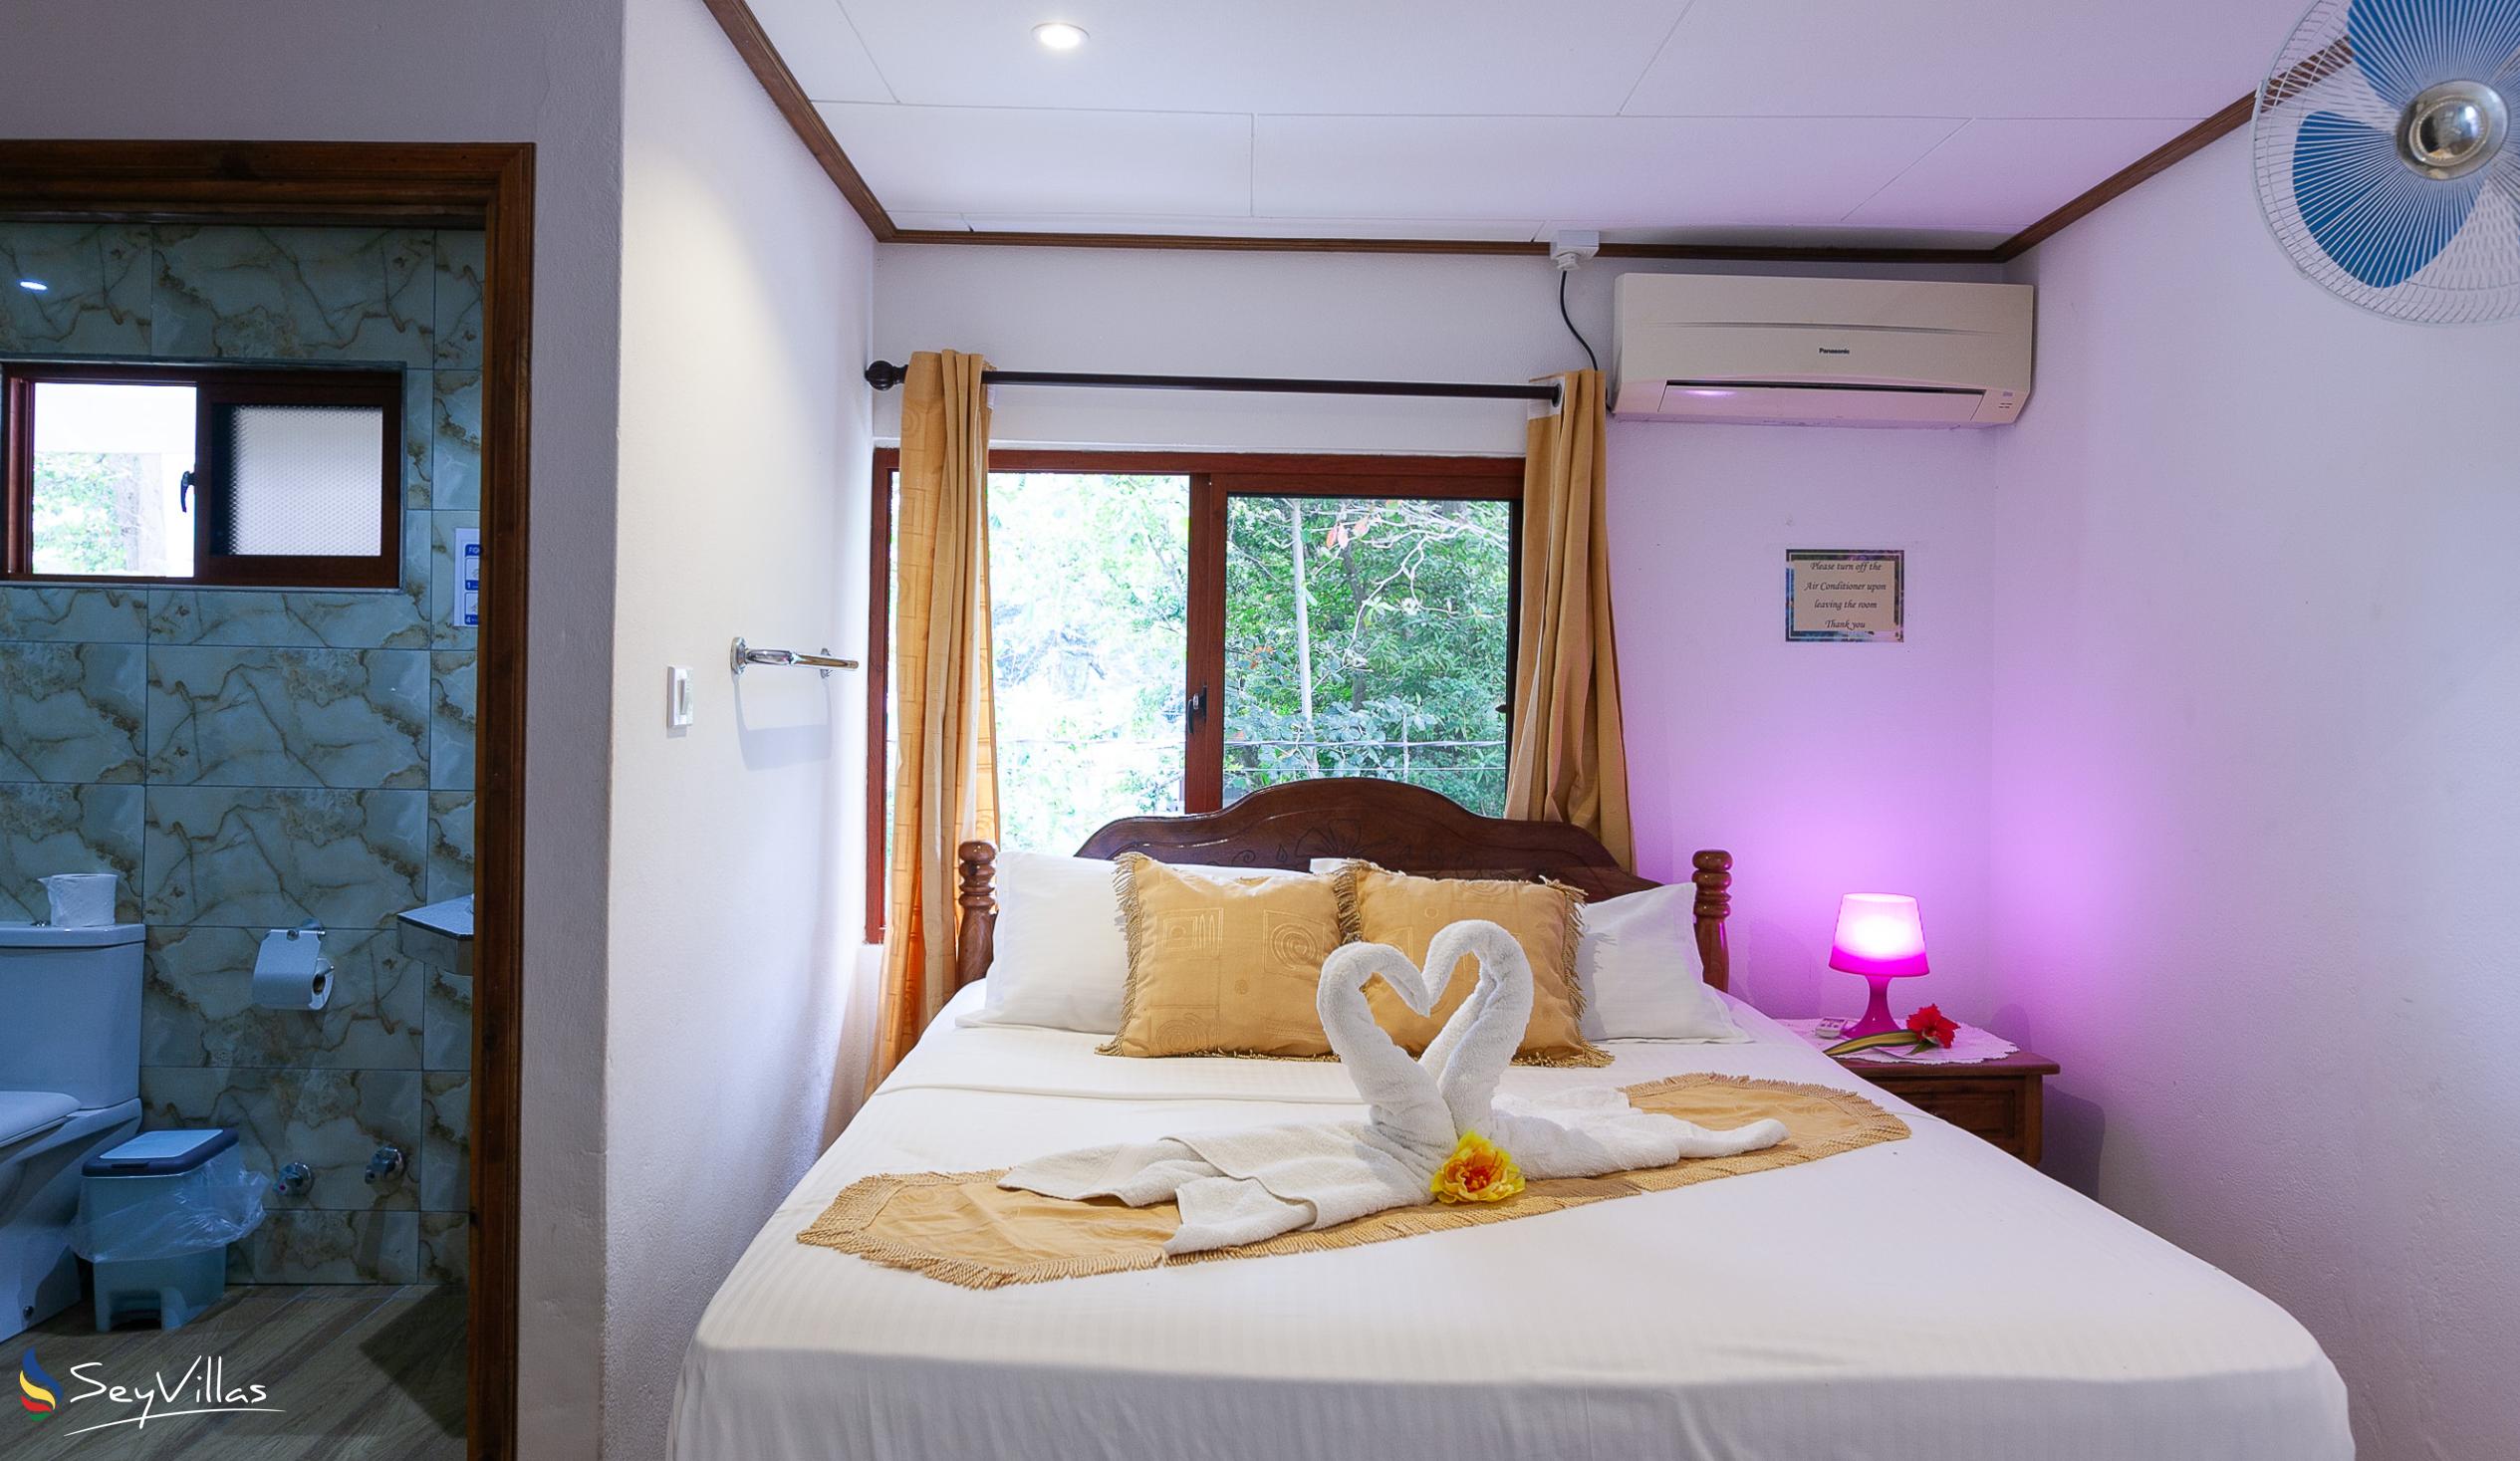 Photo 93: Tannette's Villa - Standard Queen Room - La Digue (Seychelles)